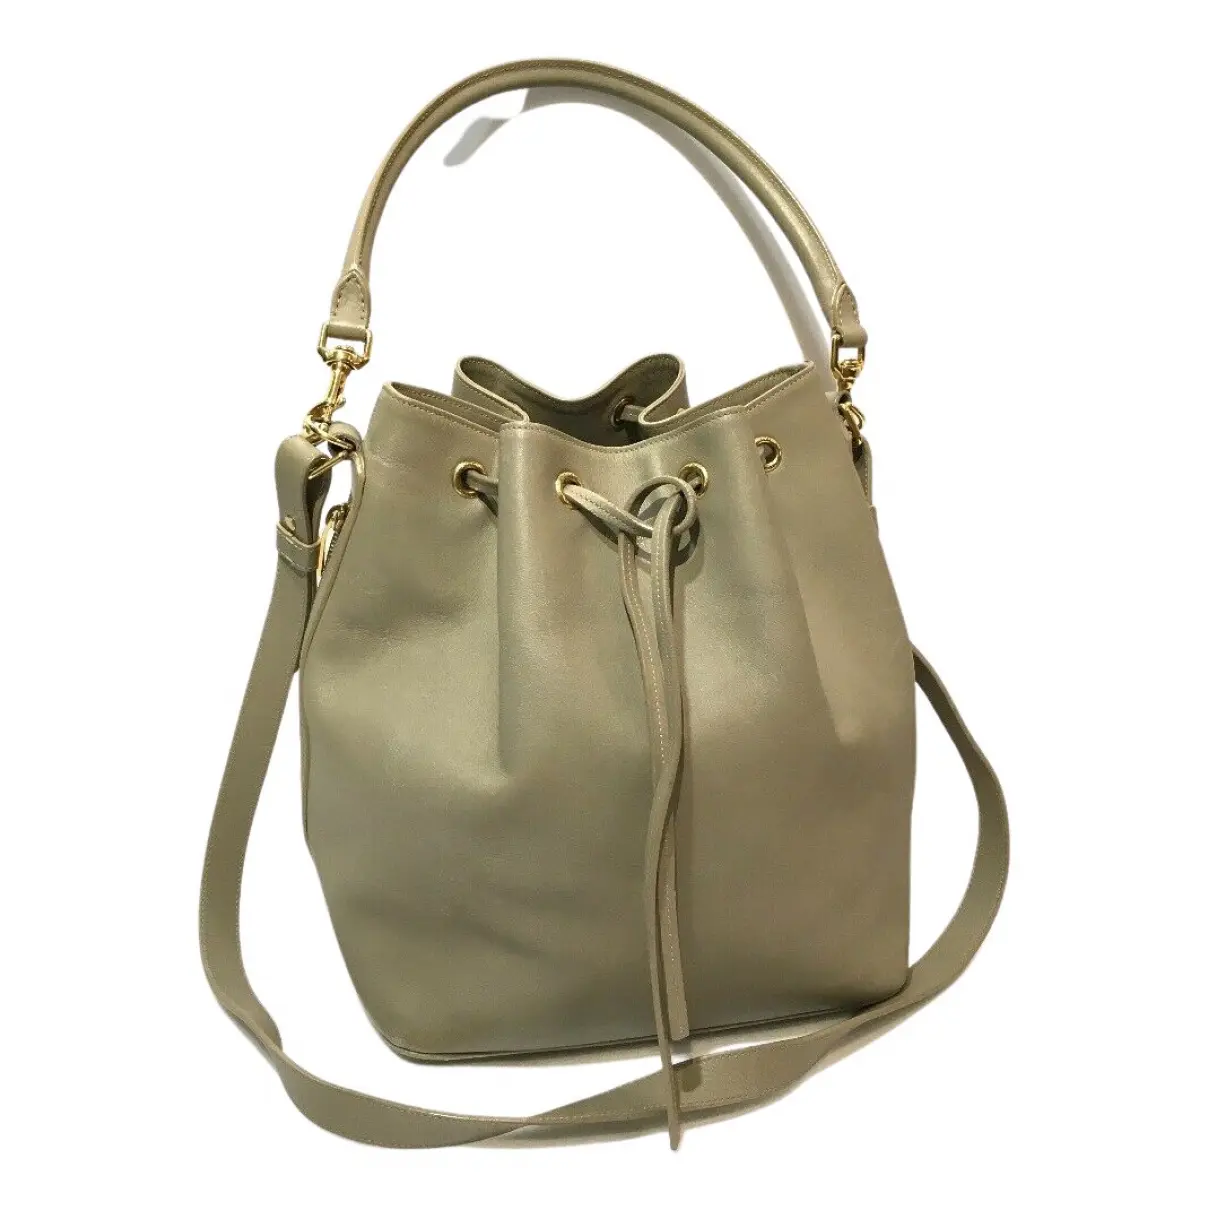 Emmanuelle leather handbag